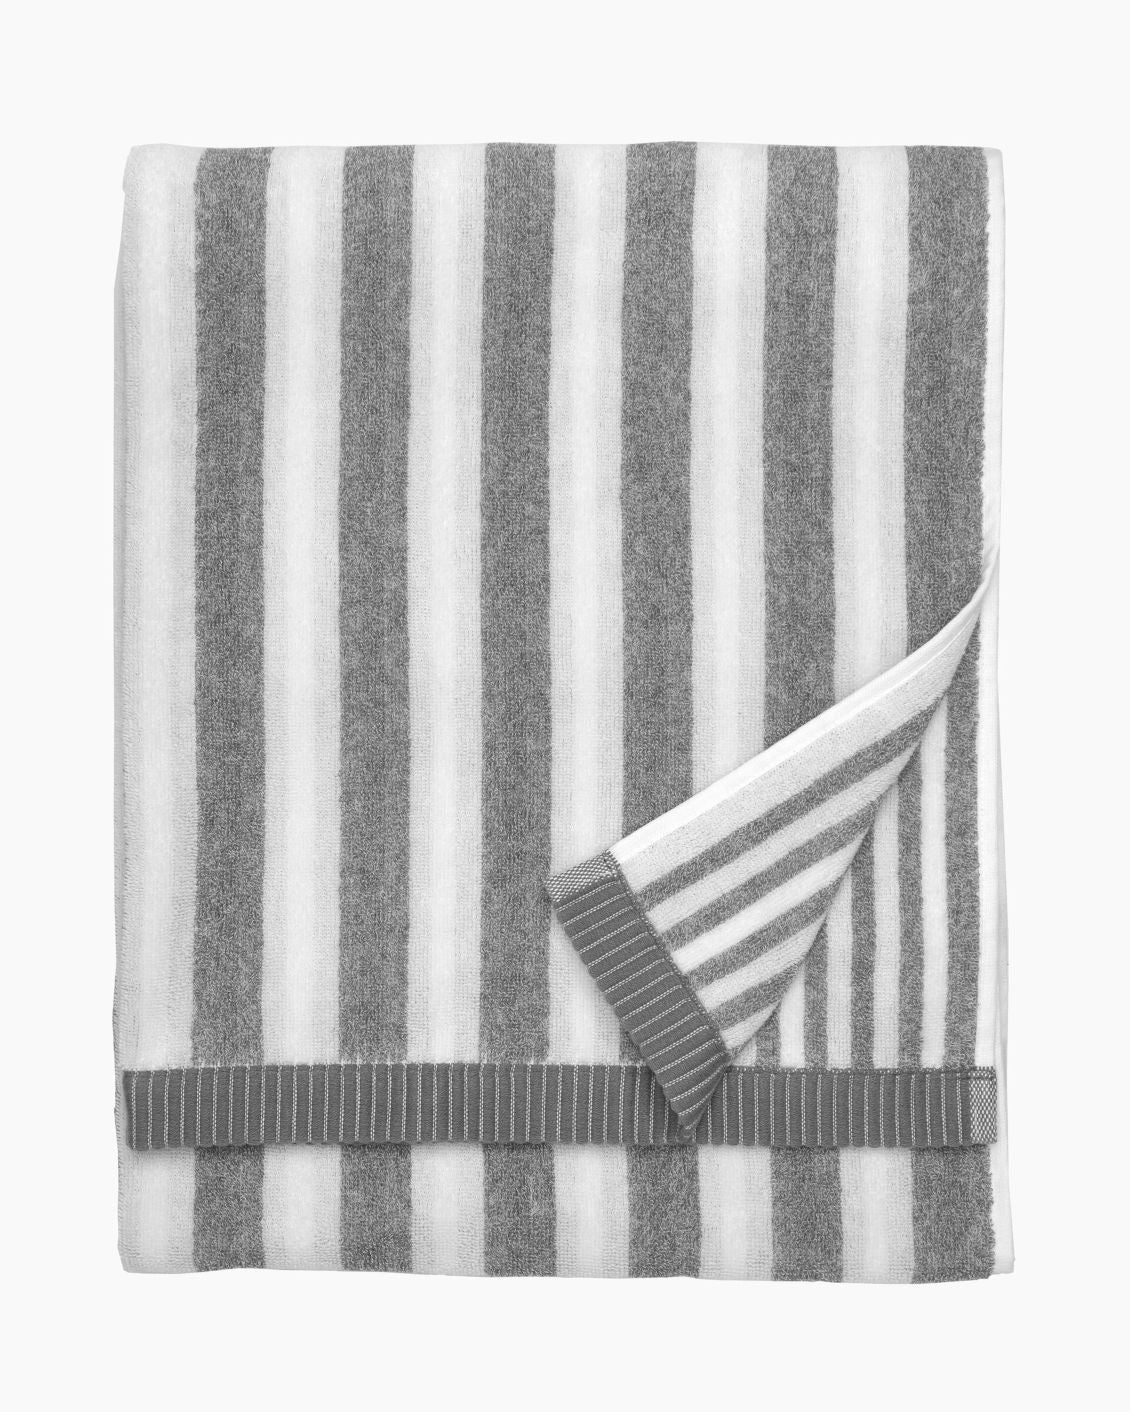 Kaksi Bath Towel 70x150cm | White and Grey